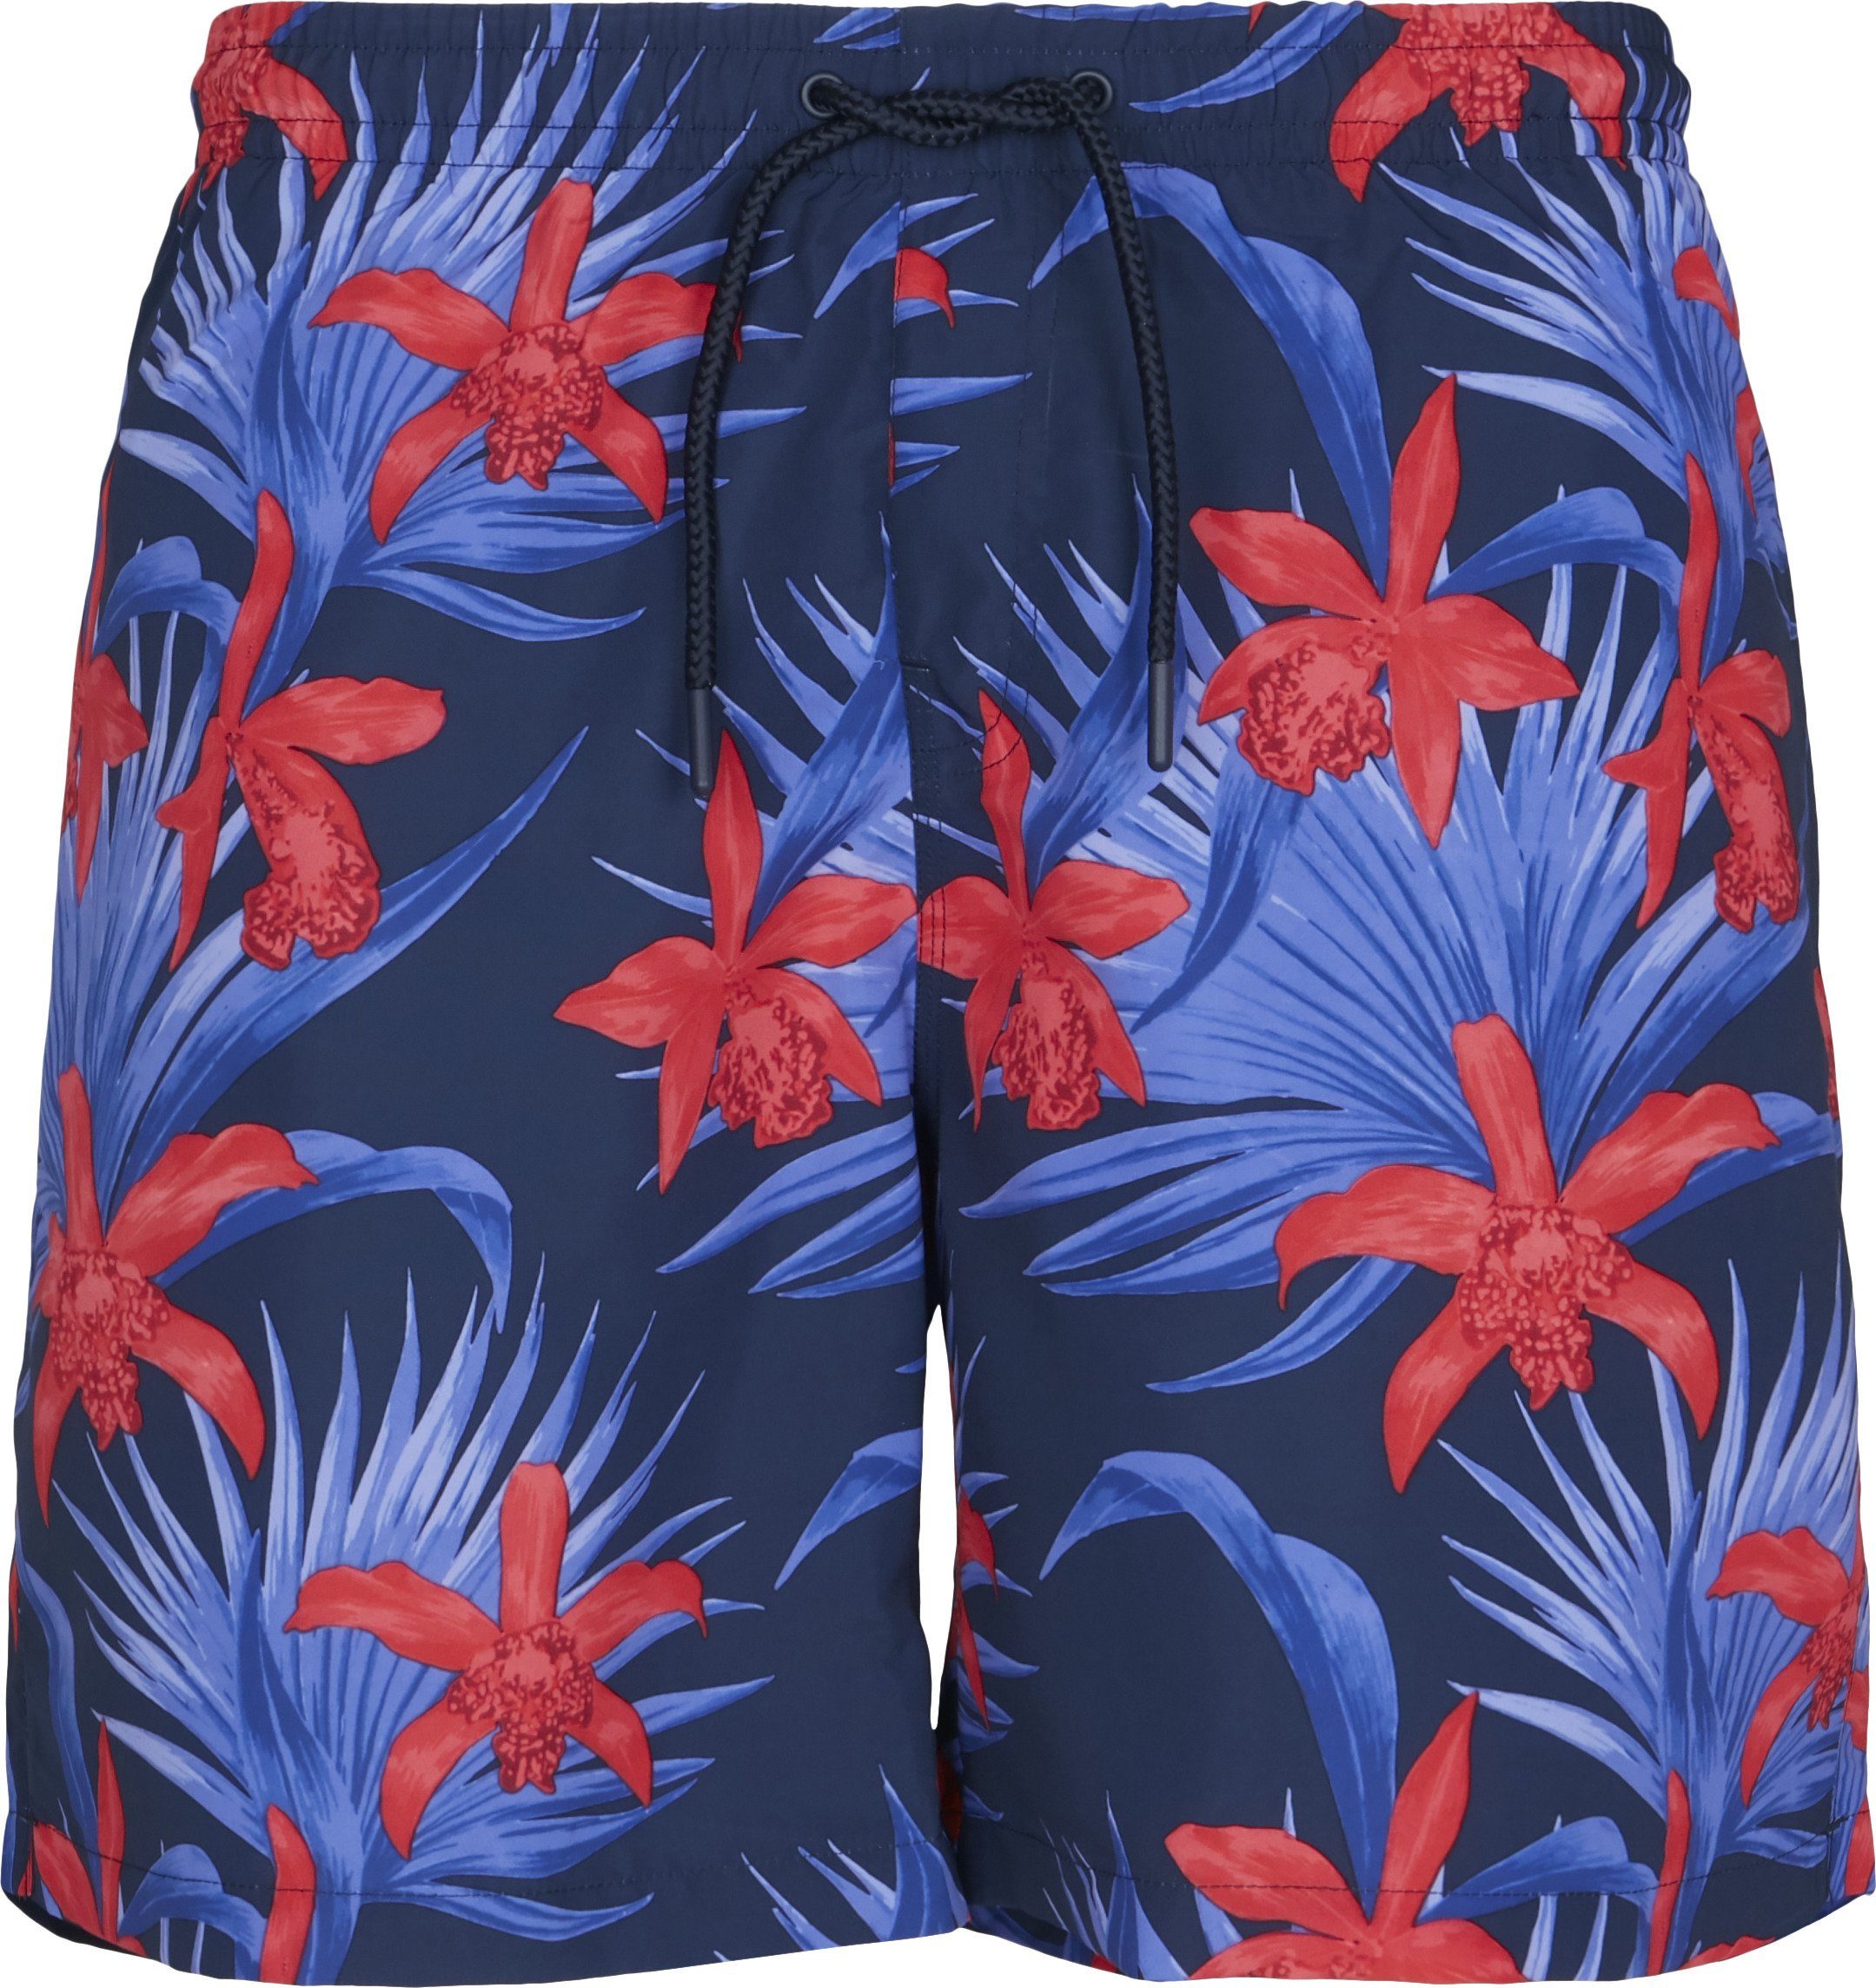 URBAN CLASSICS Badeshorts Herren Pattern Swim Shorts blue/red | Badeshorts